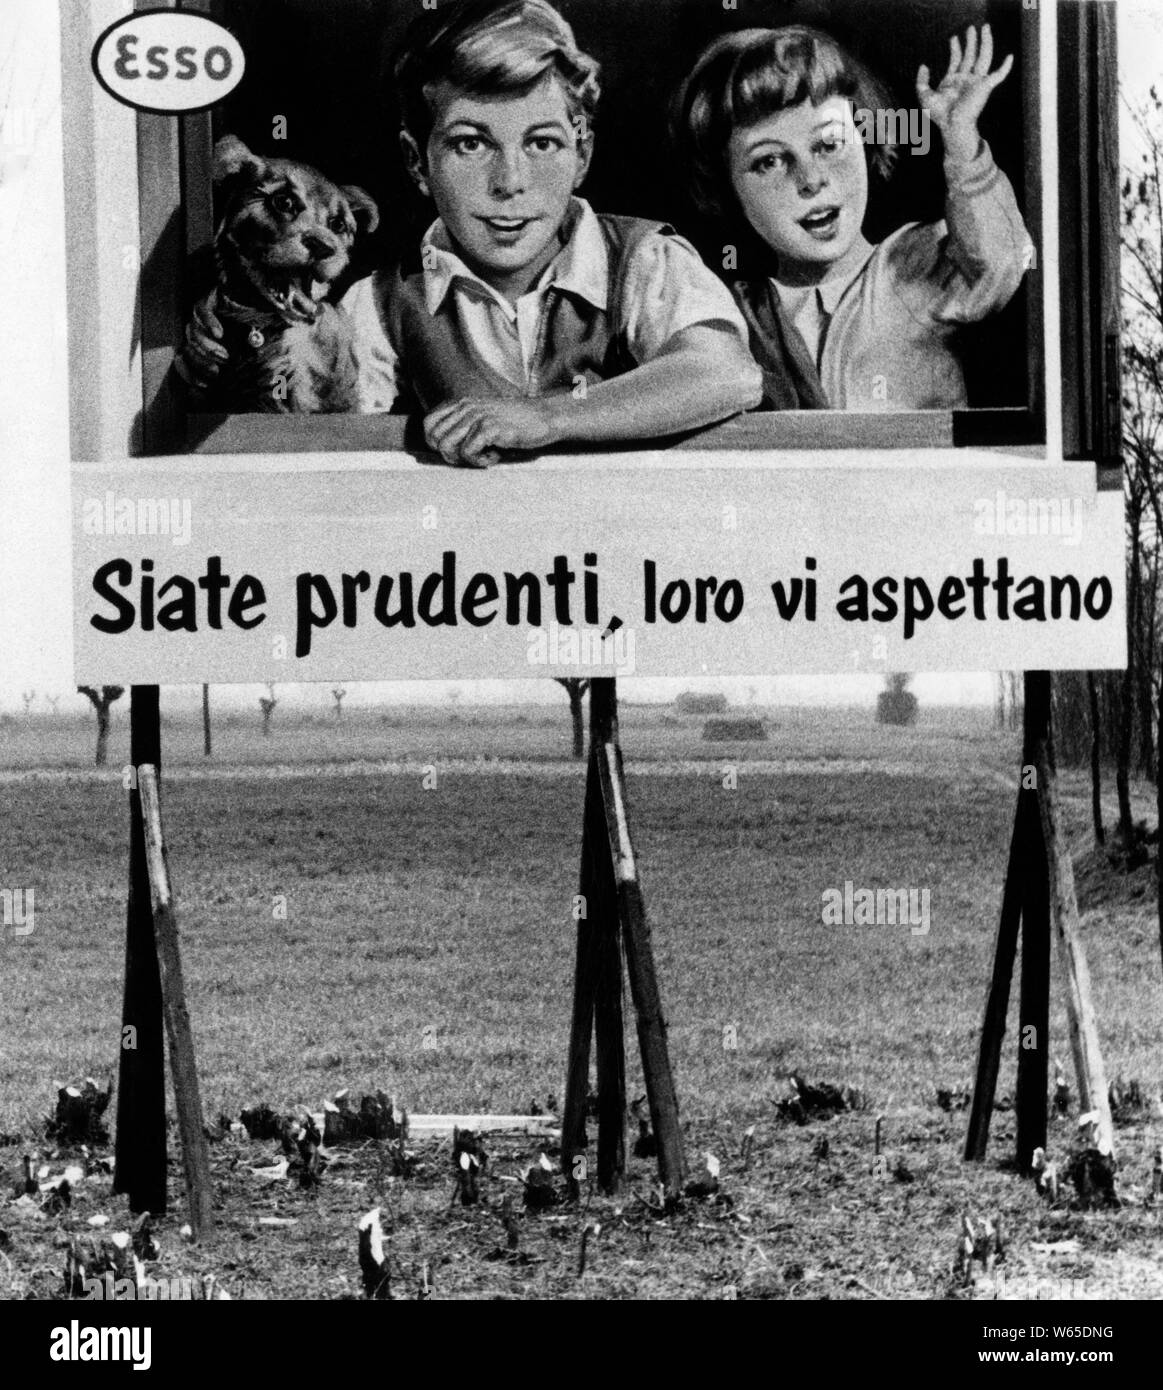 Esso vallas publicitarias, Italia 1958 Foto de stock